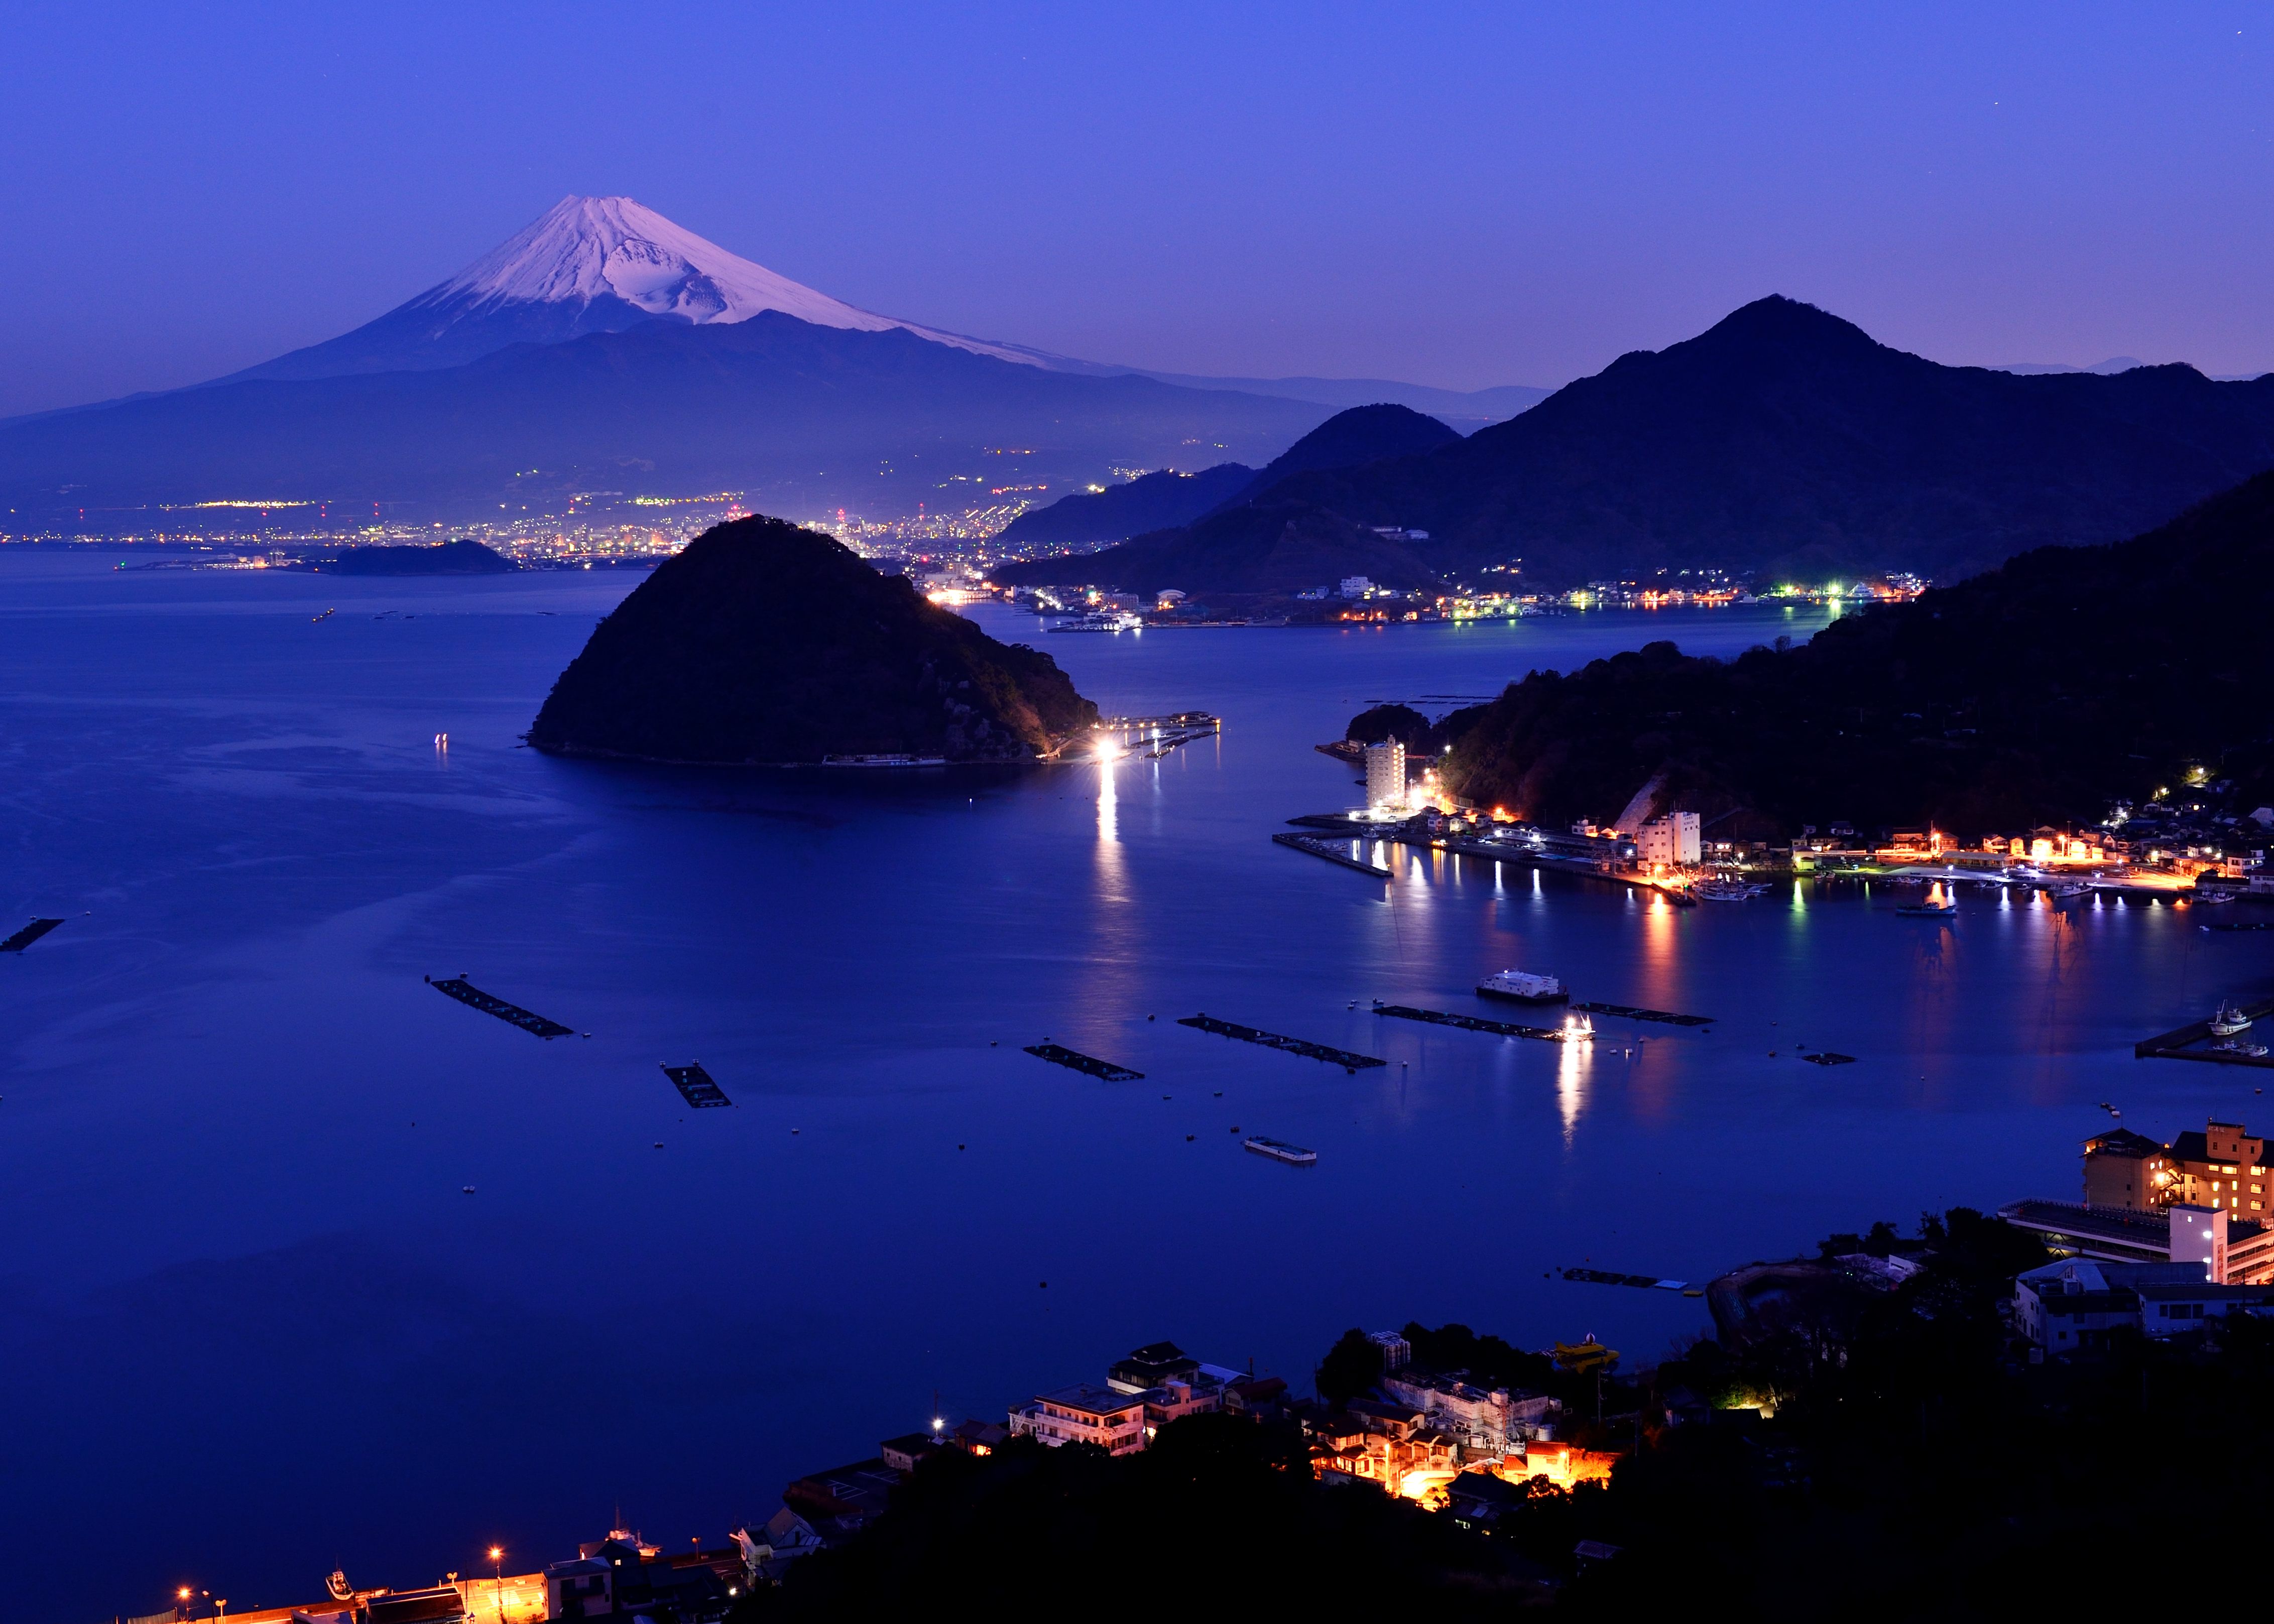 354244 Hintergrundbild herunterladen erde/natur, fujisan, japan, landschaft, nacht, vulkan, vulkane - Bildschirmschoner und Bilder kostenlos